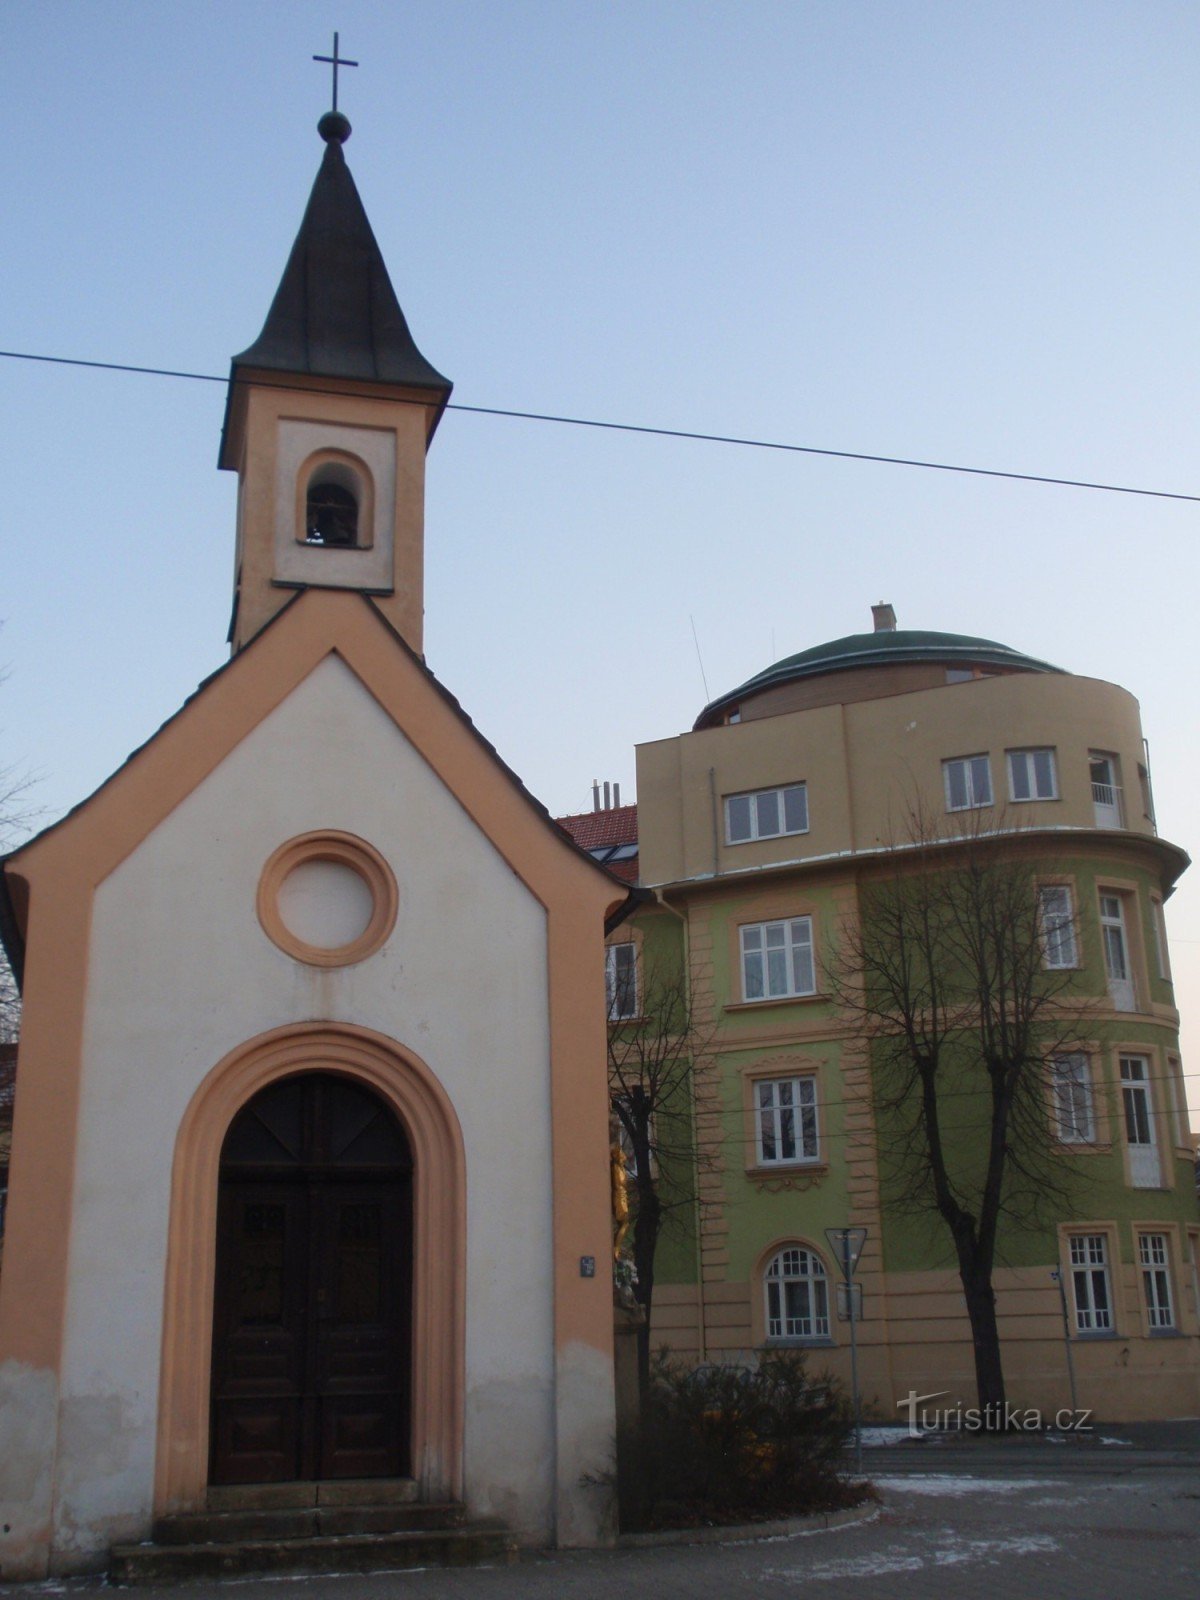 Szent Kápolna Františka Brno-Židenicében